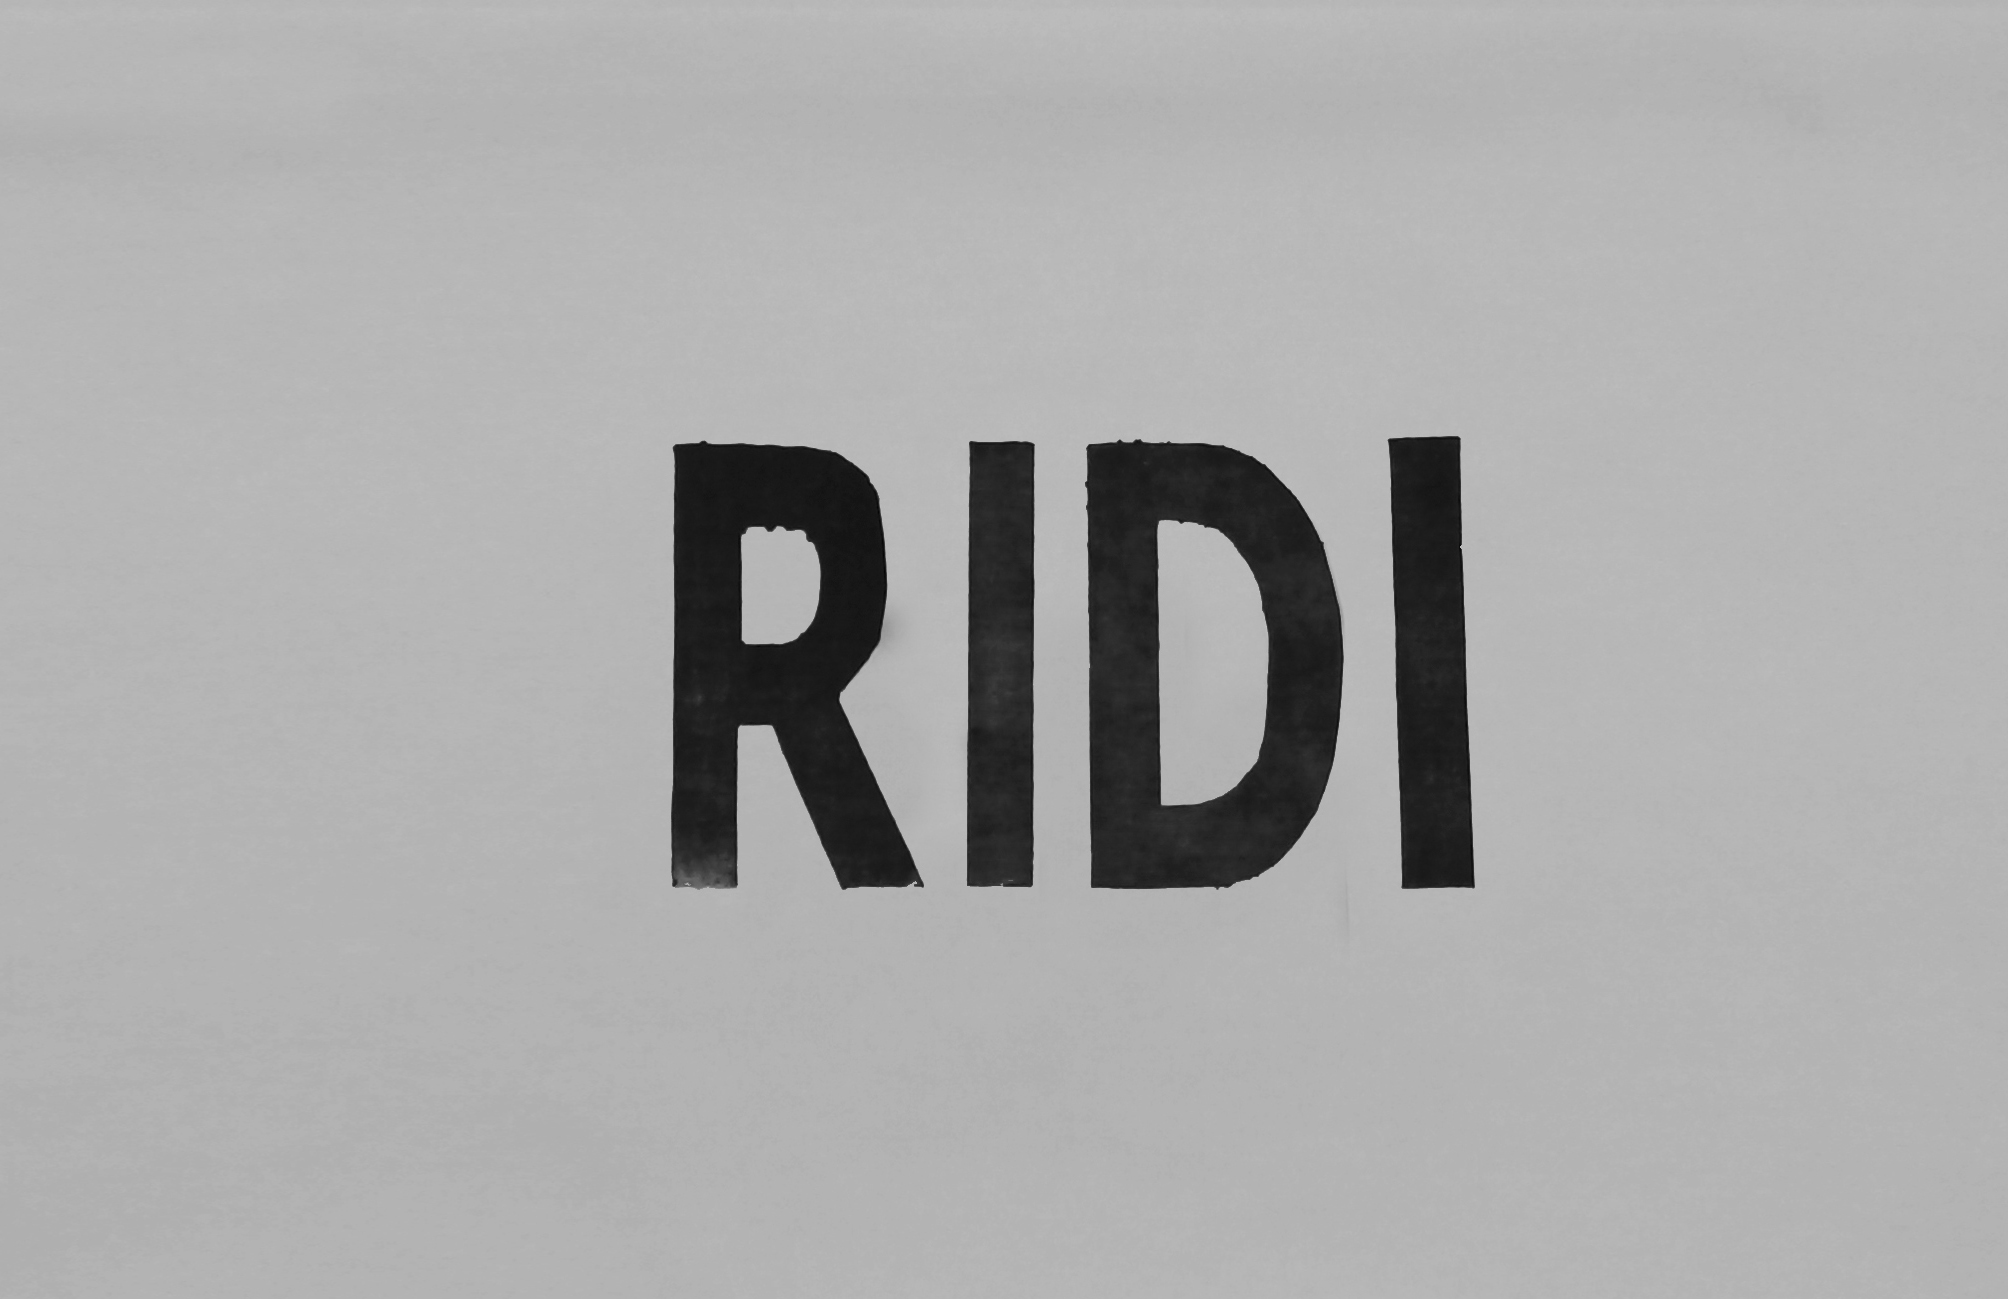 "Ridi" Print on tissue